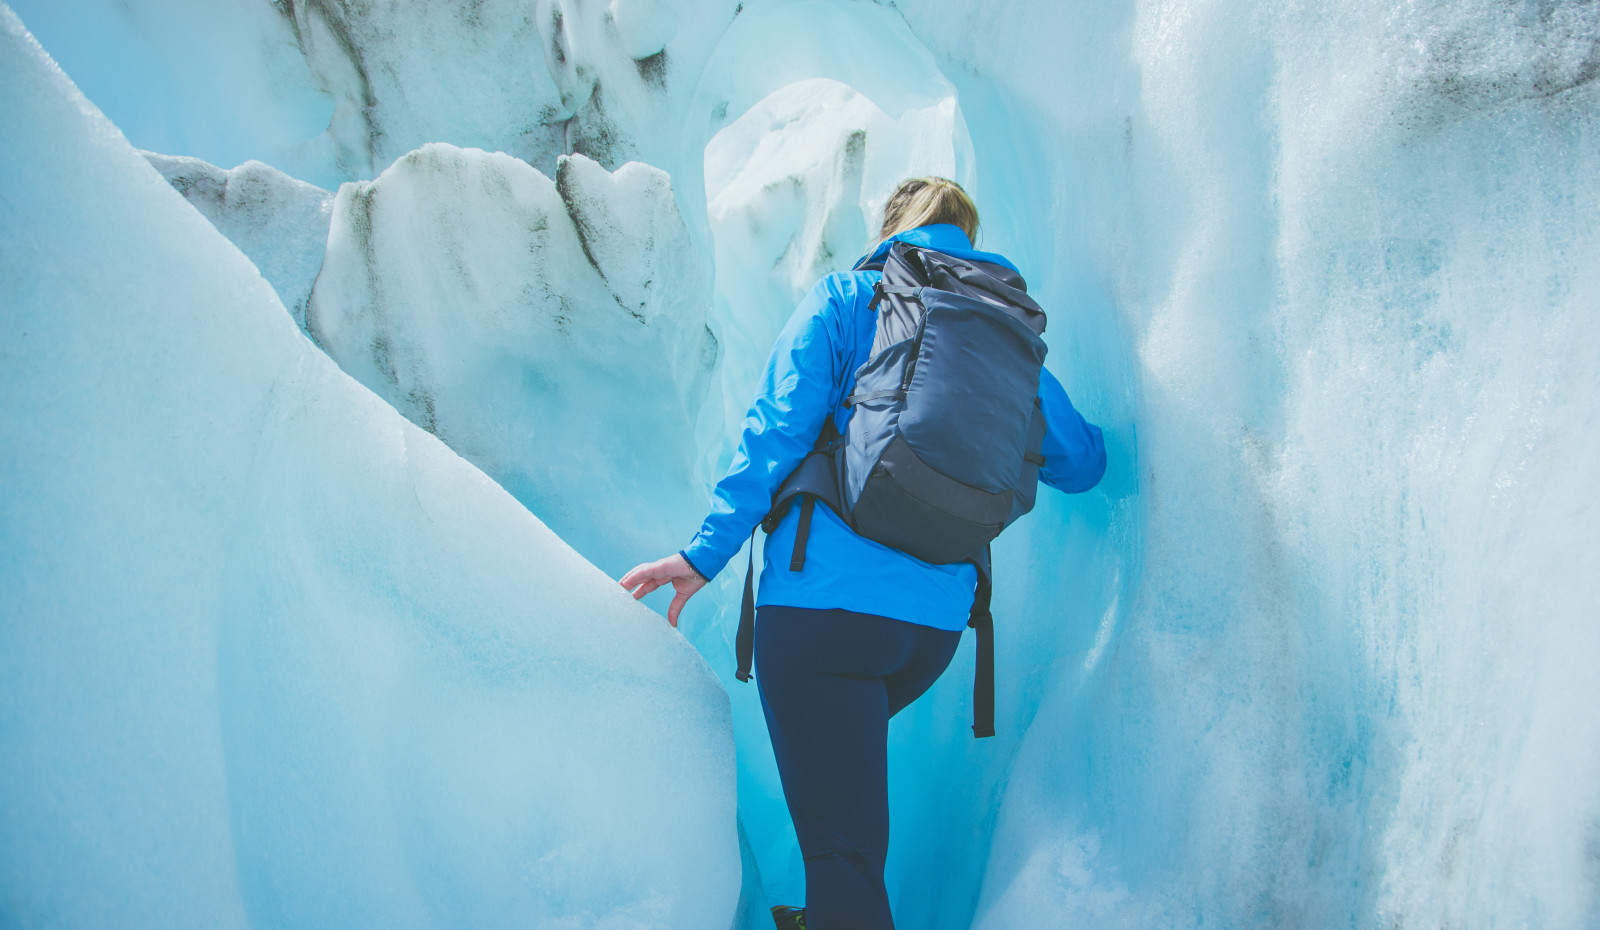 female traveler on glacier ice climbing adventure 2022 03 04 23 17 05 utc